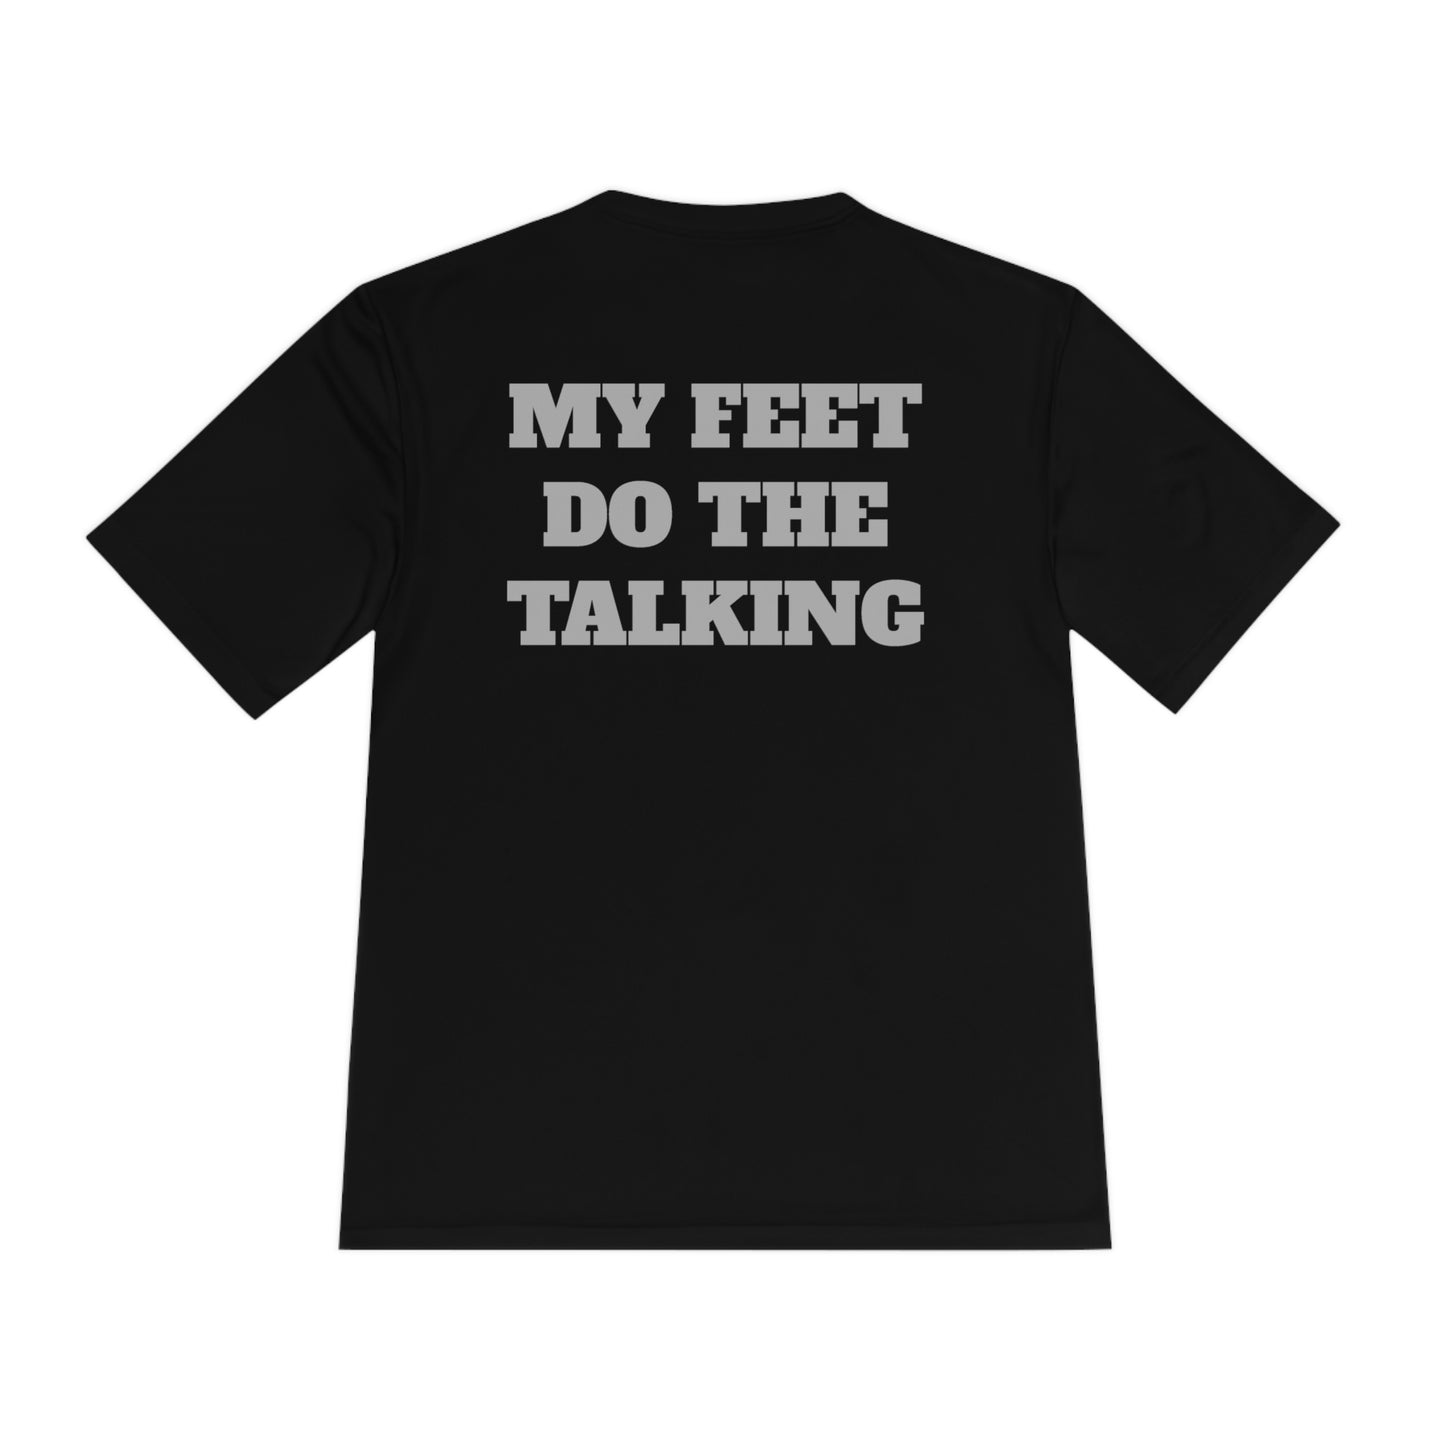 MY FEET DO THE TALKING Athletic T-Shirt (Unisex)